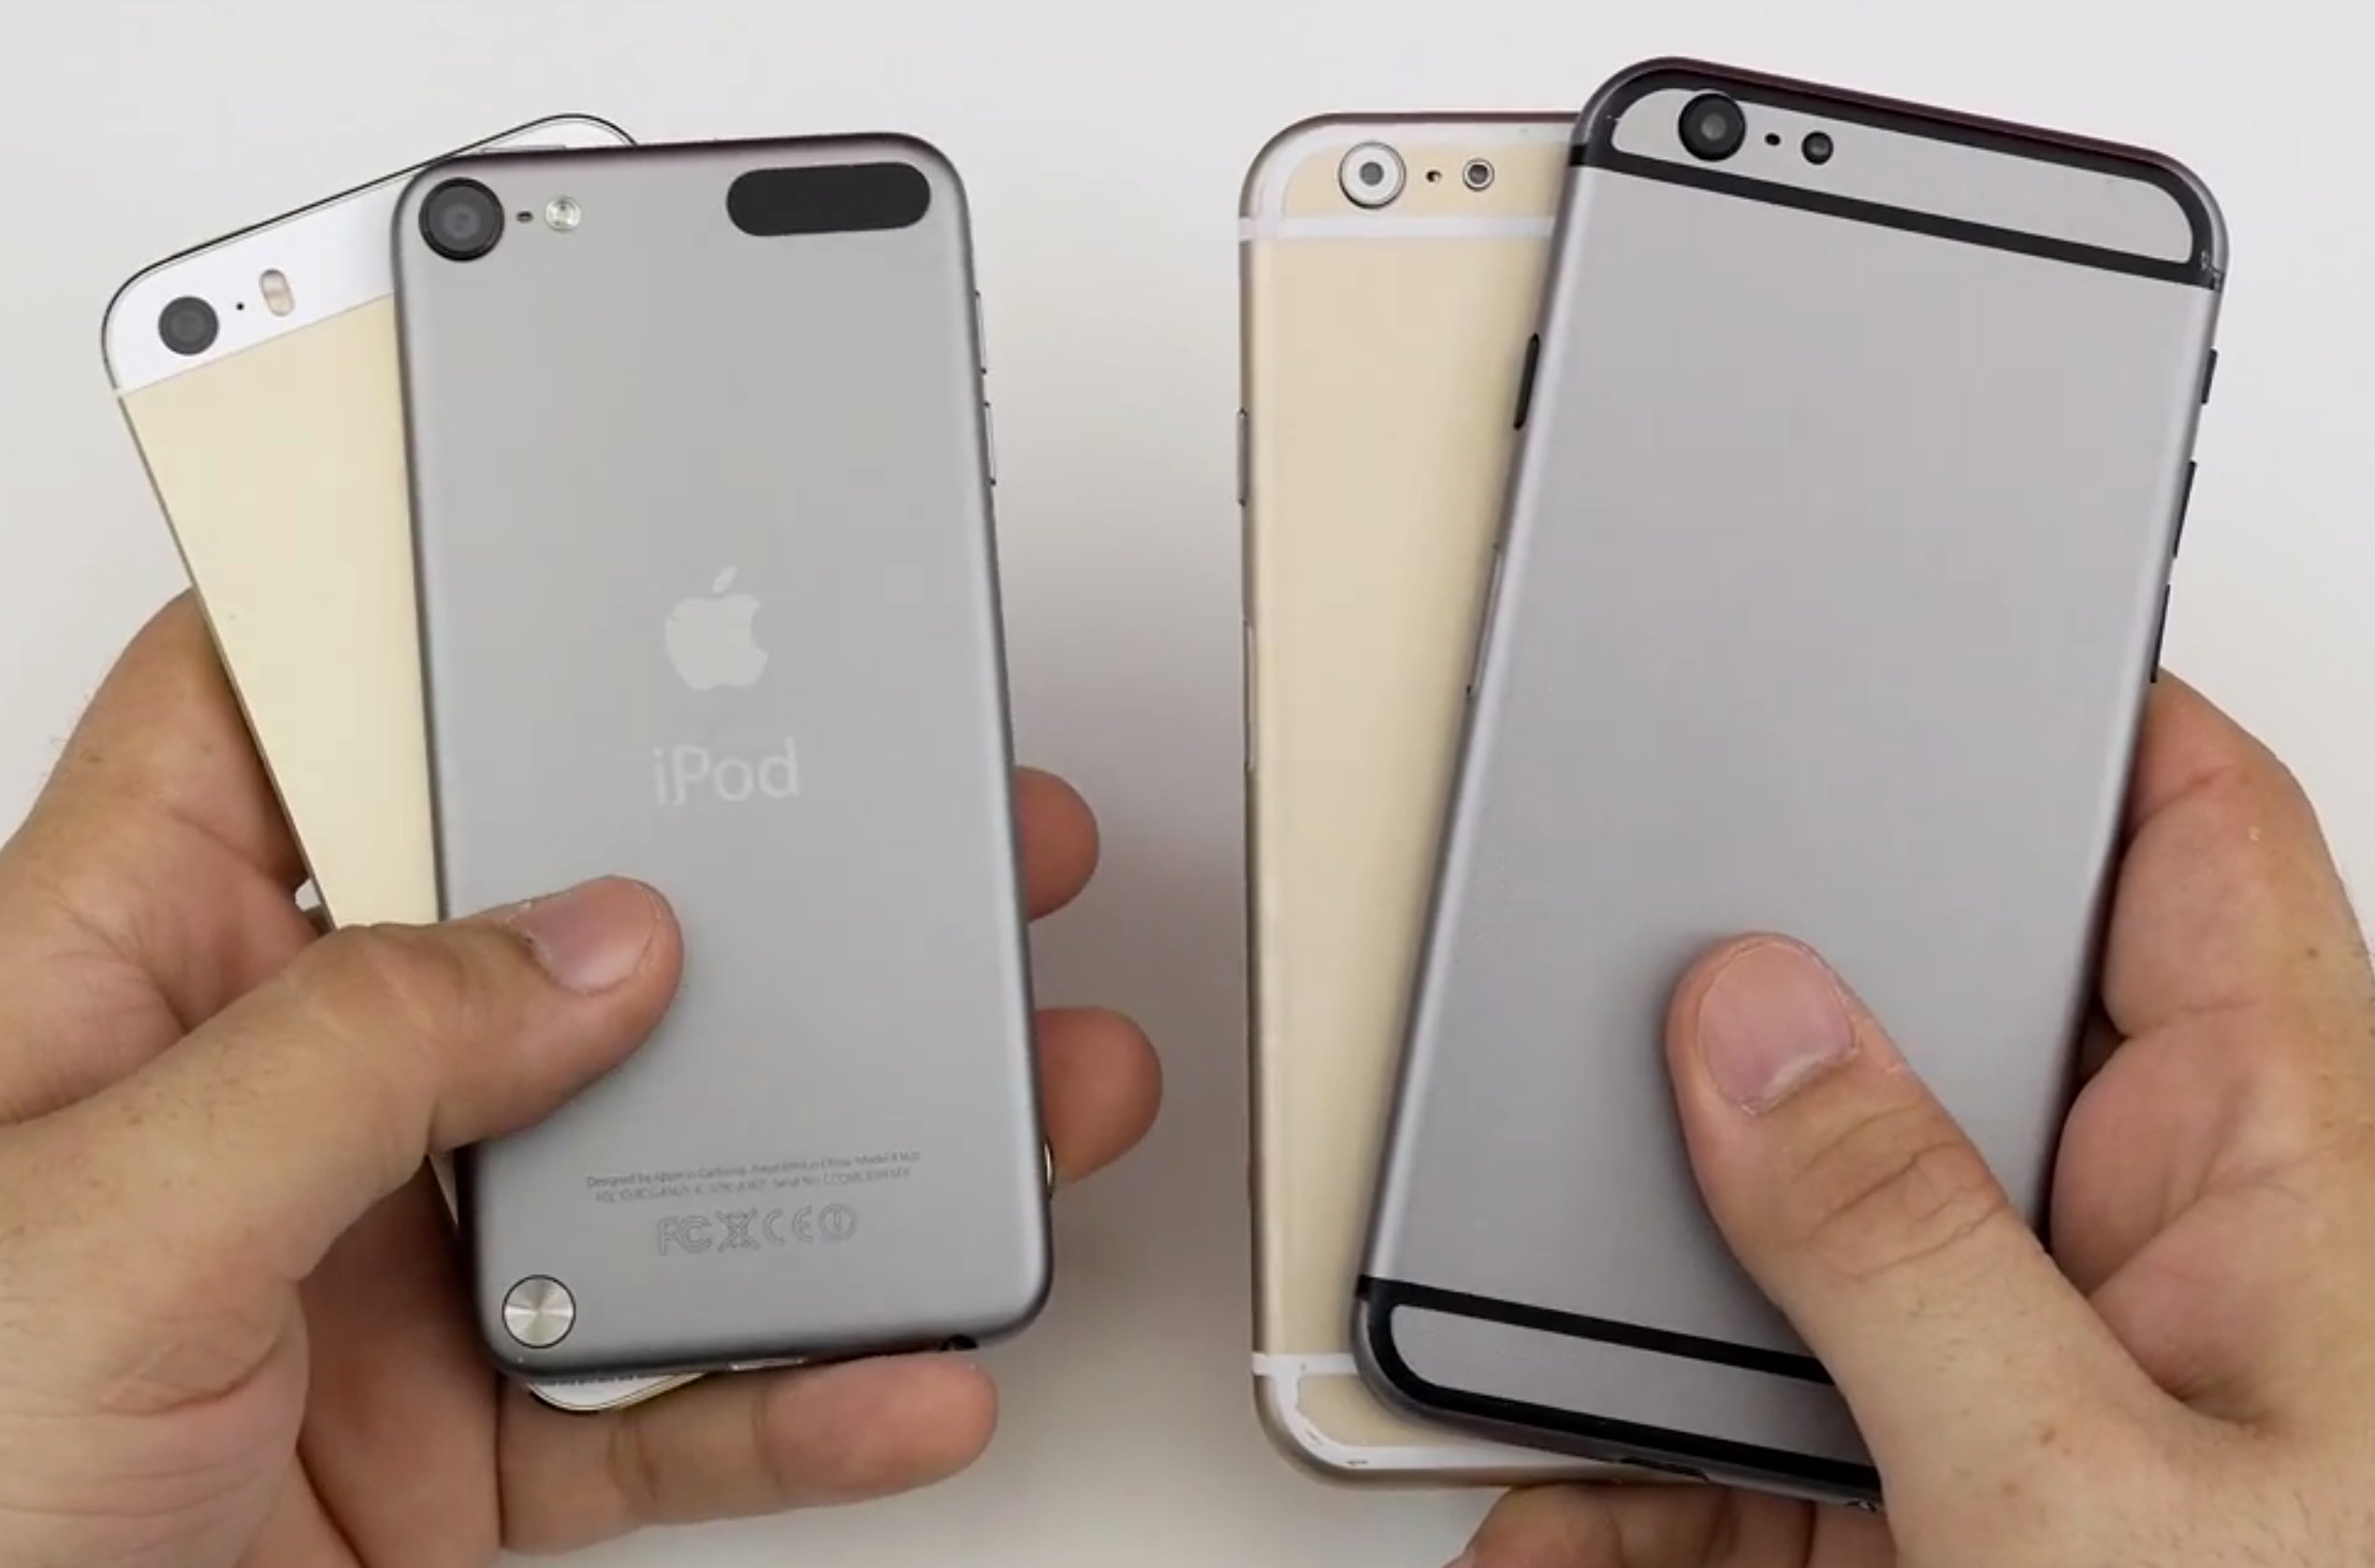 Vergleich: iPhone 6, iPhone 5s vs. Banane, gold vs. spacegrau 5